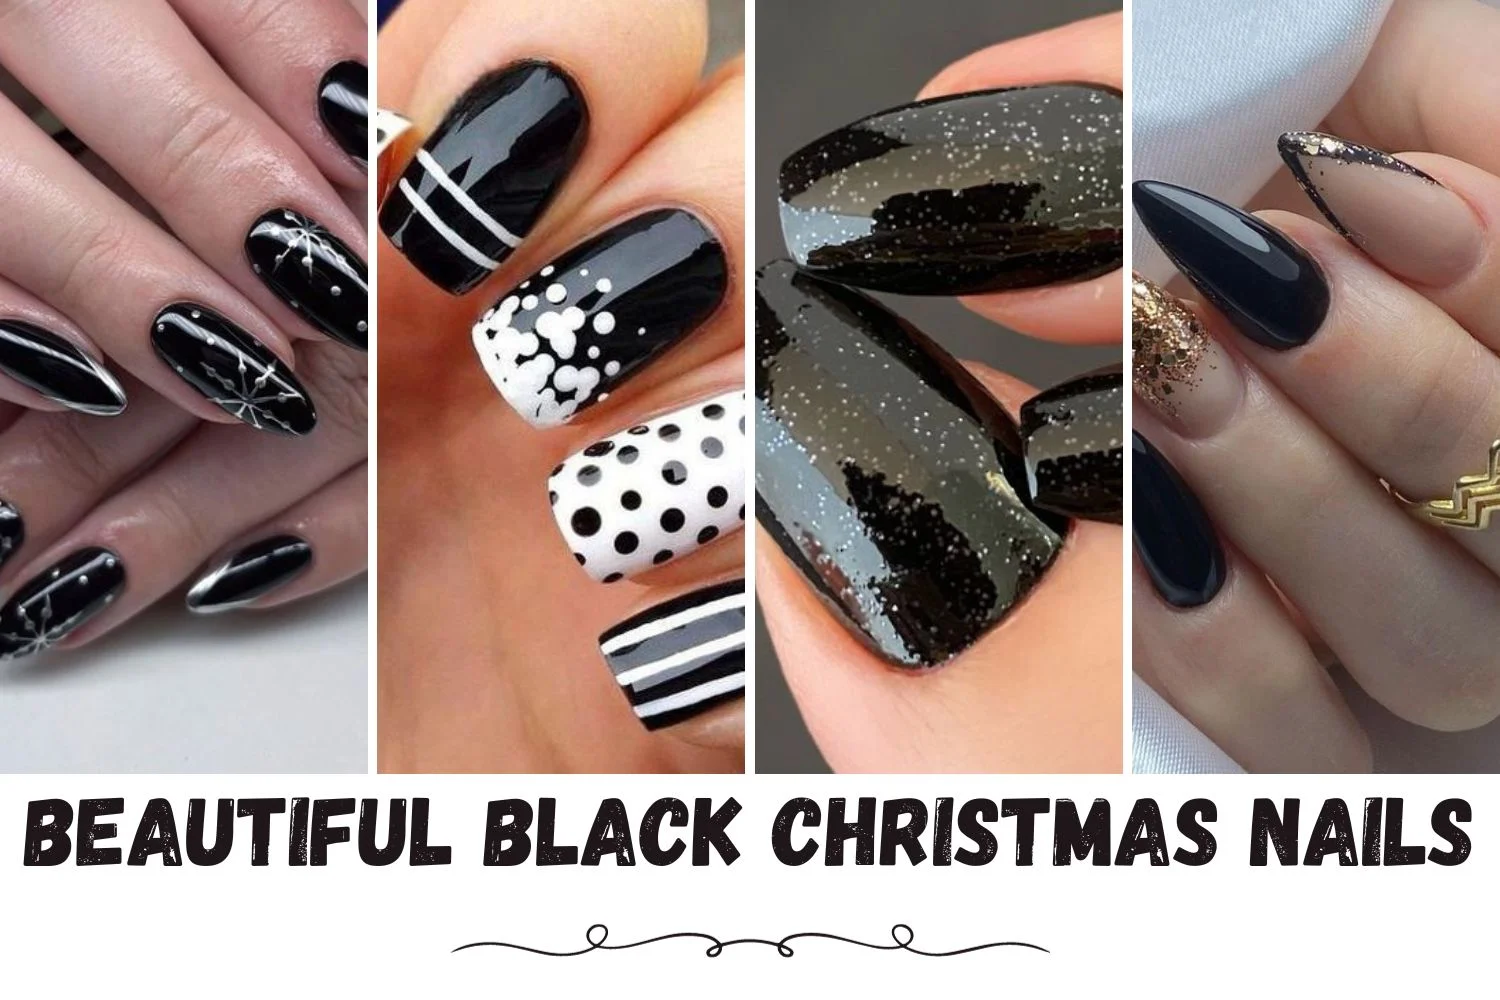 25 Most Beautiful Black Christmas Nails Design Ideas